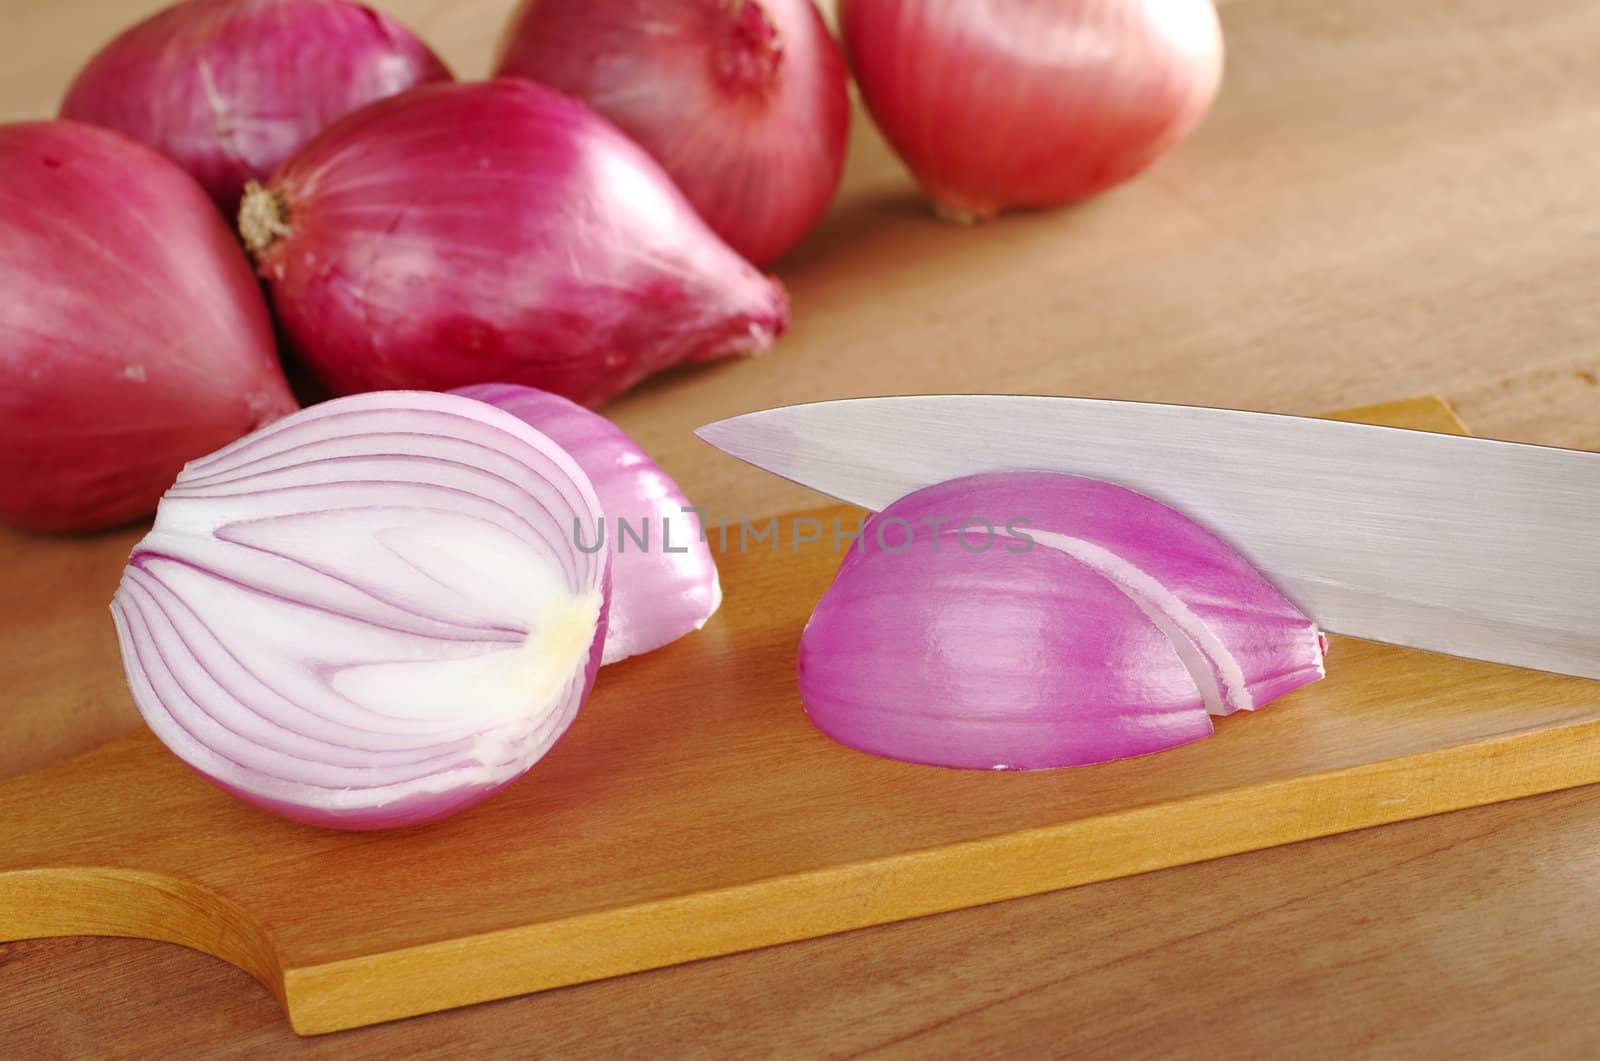 Cutting Red Onions by ildi